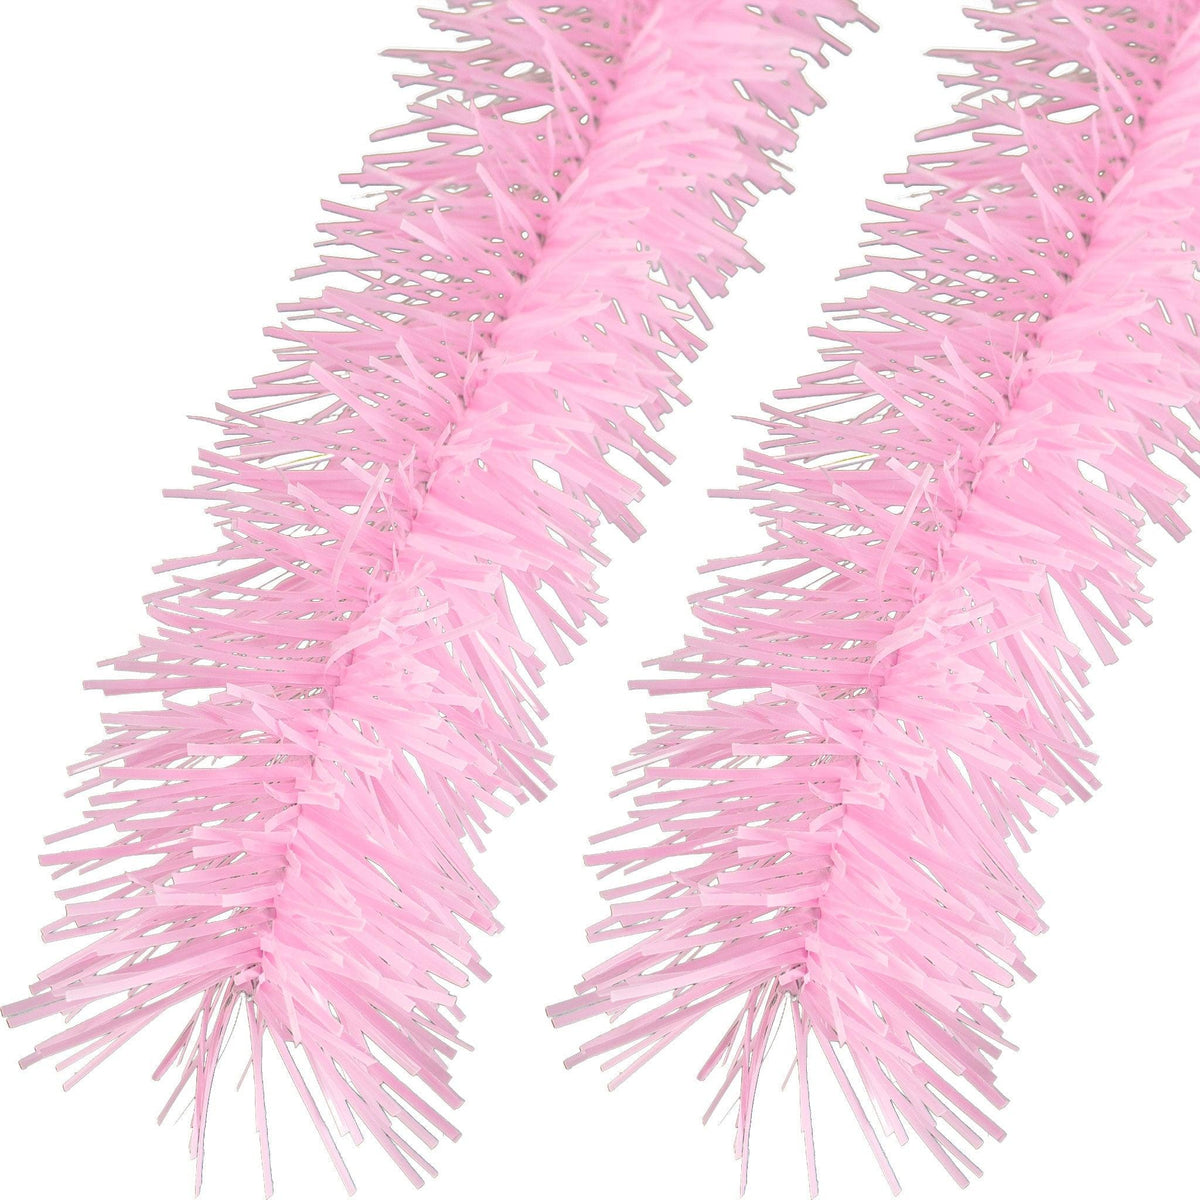 Lee Display's brand new 25FT Shiny Pink Tinsel Garlands and Fringe Embellishments on sale at leedisplay.com